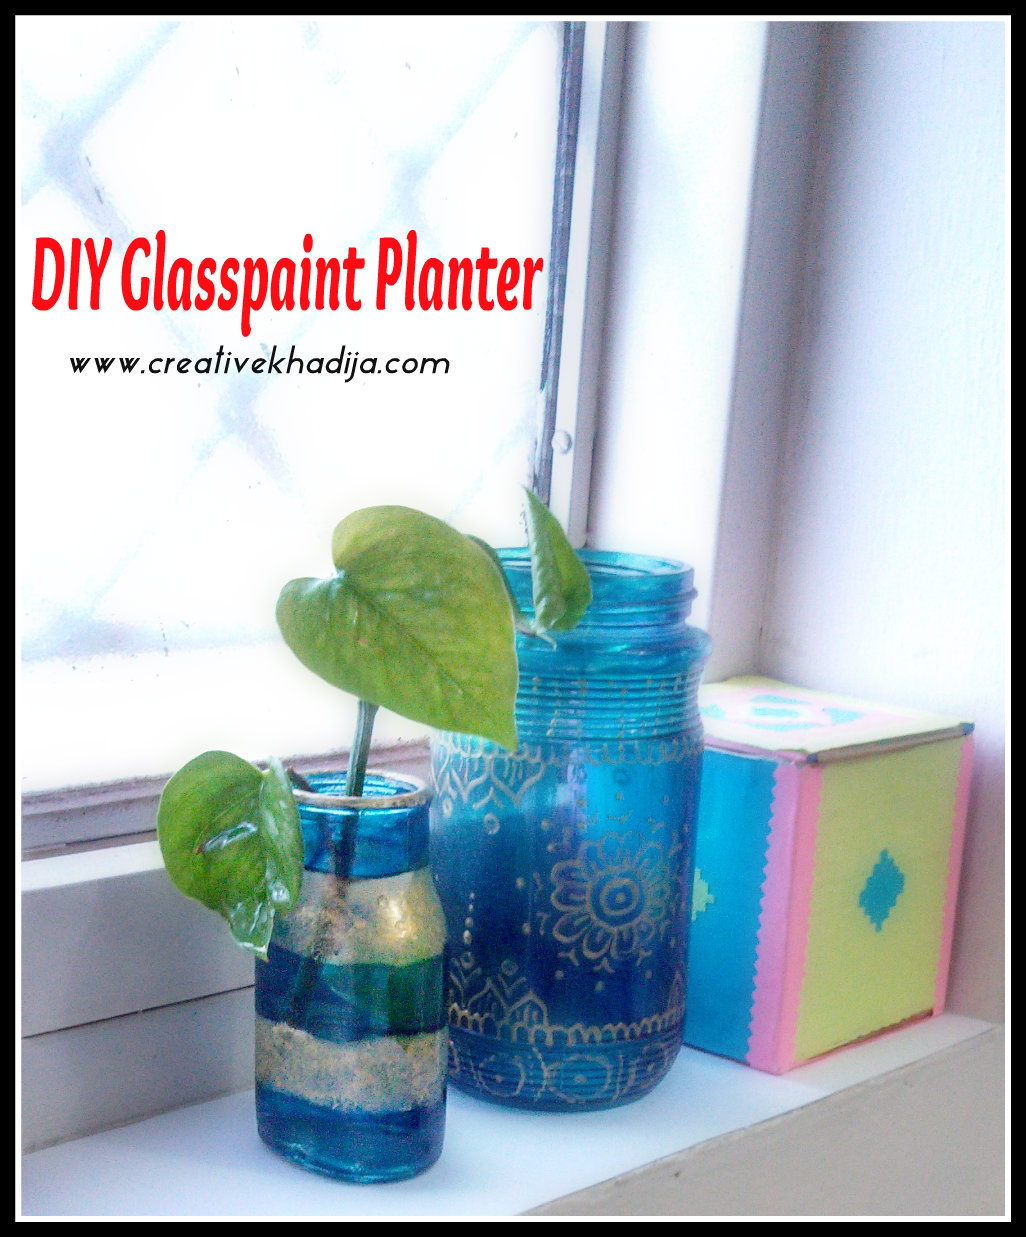 http://creativekhadija.com/wp-content/uploads/2015/02/Plant-Container-Glass-Paint-DIY-planter-ideas.jpg